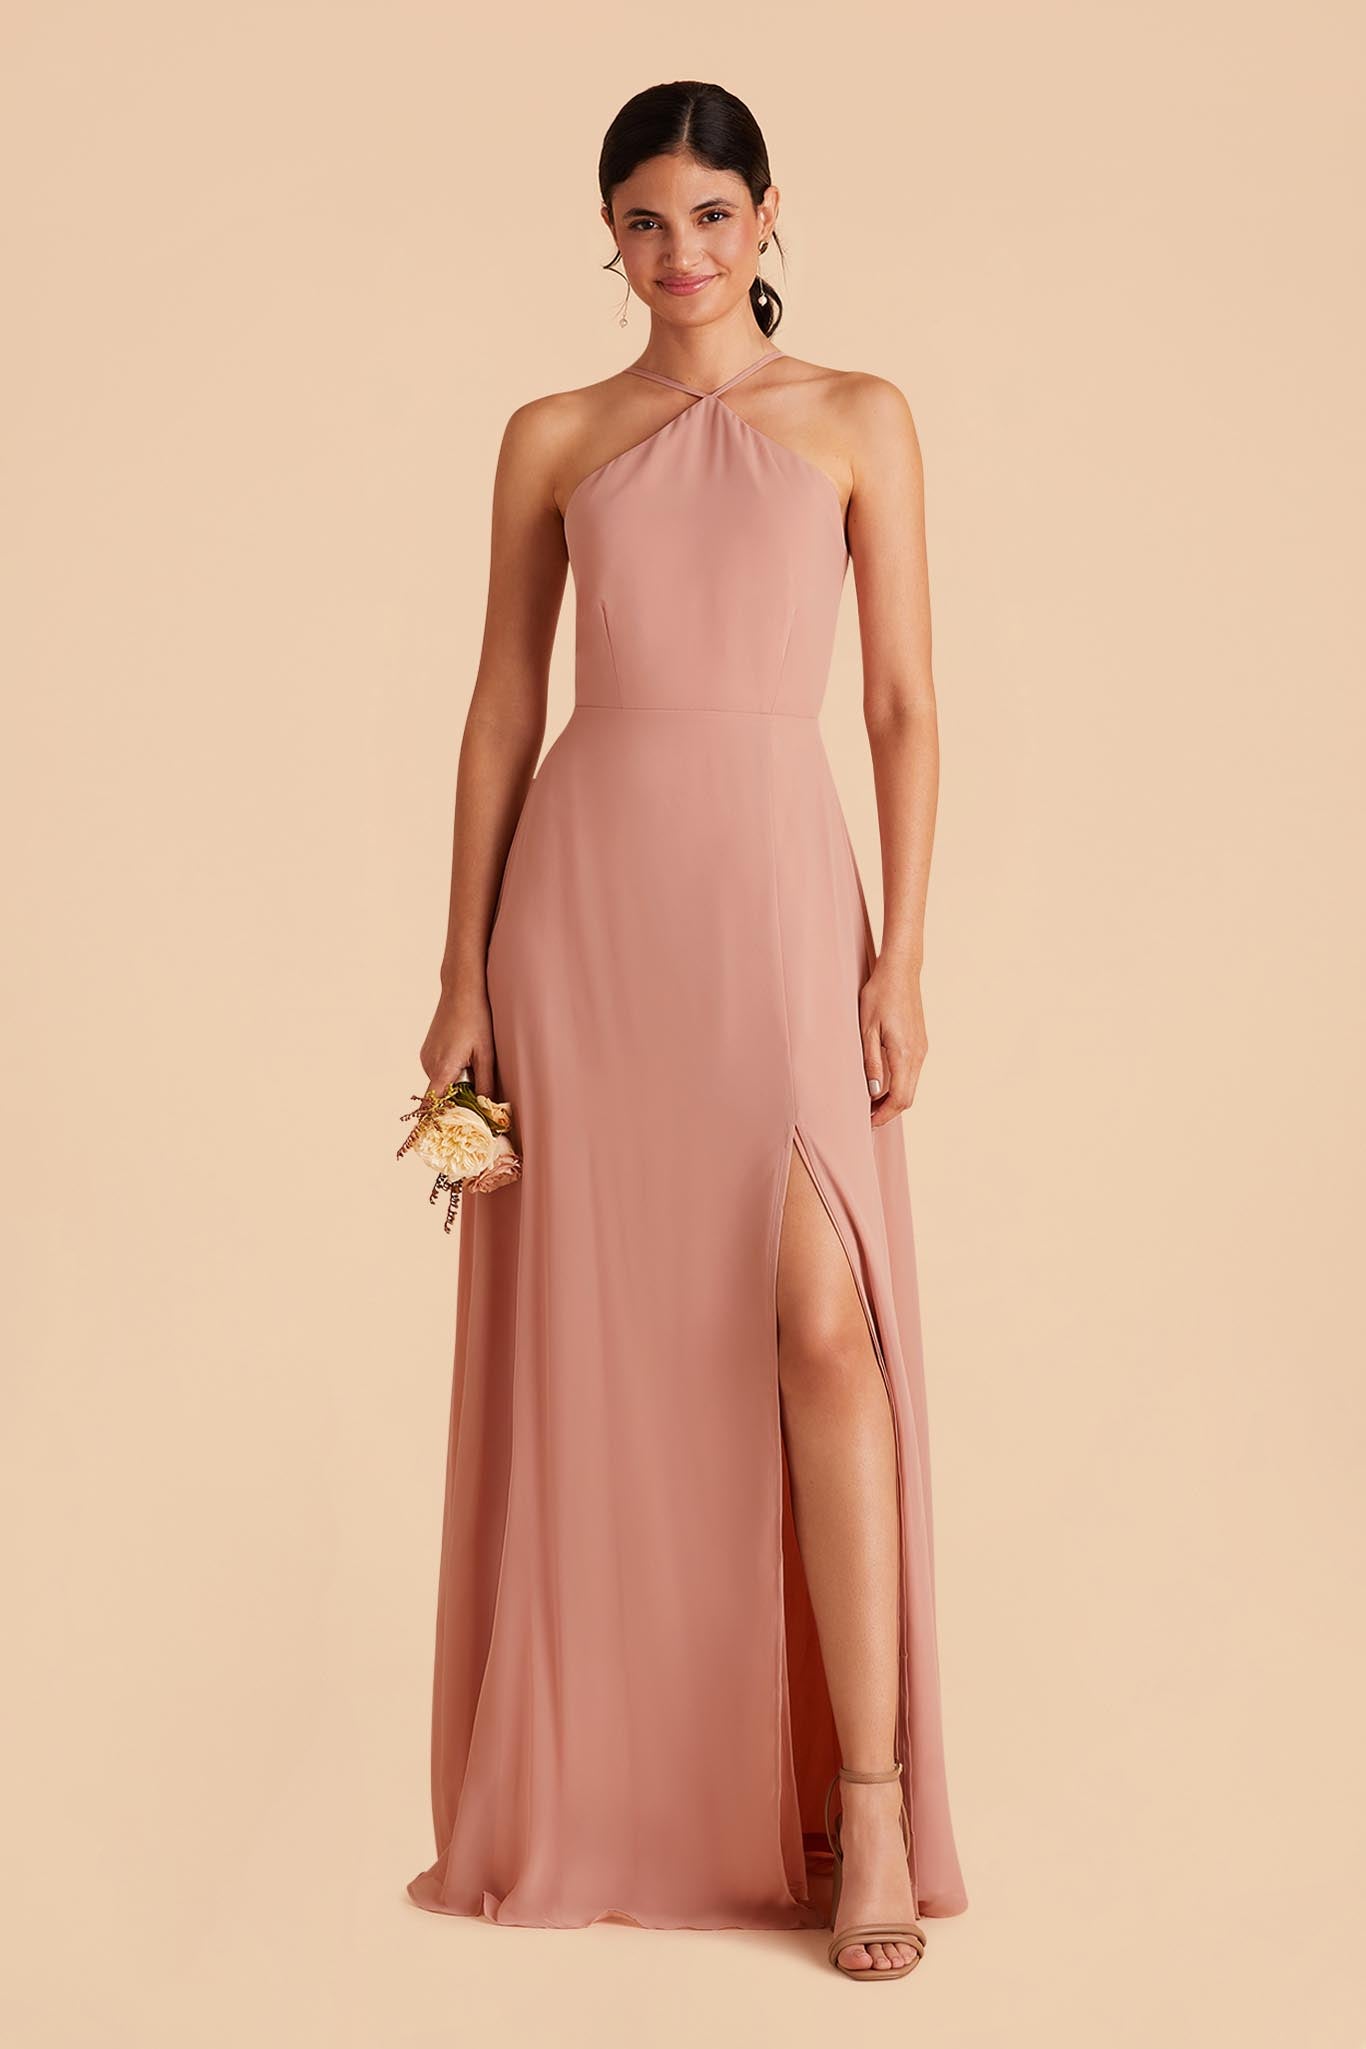 Sleeveless Dusty Rose A-line Sparkle Sequin Formal Evening Dress – Ballbella